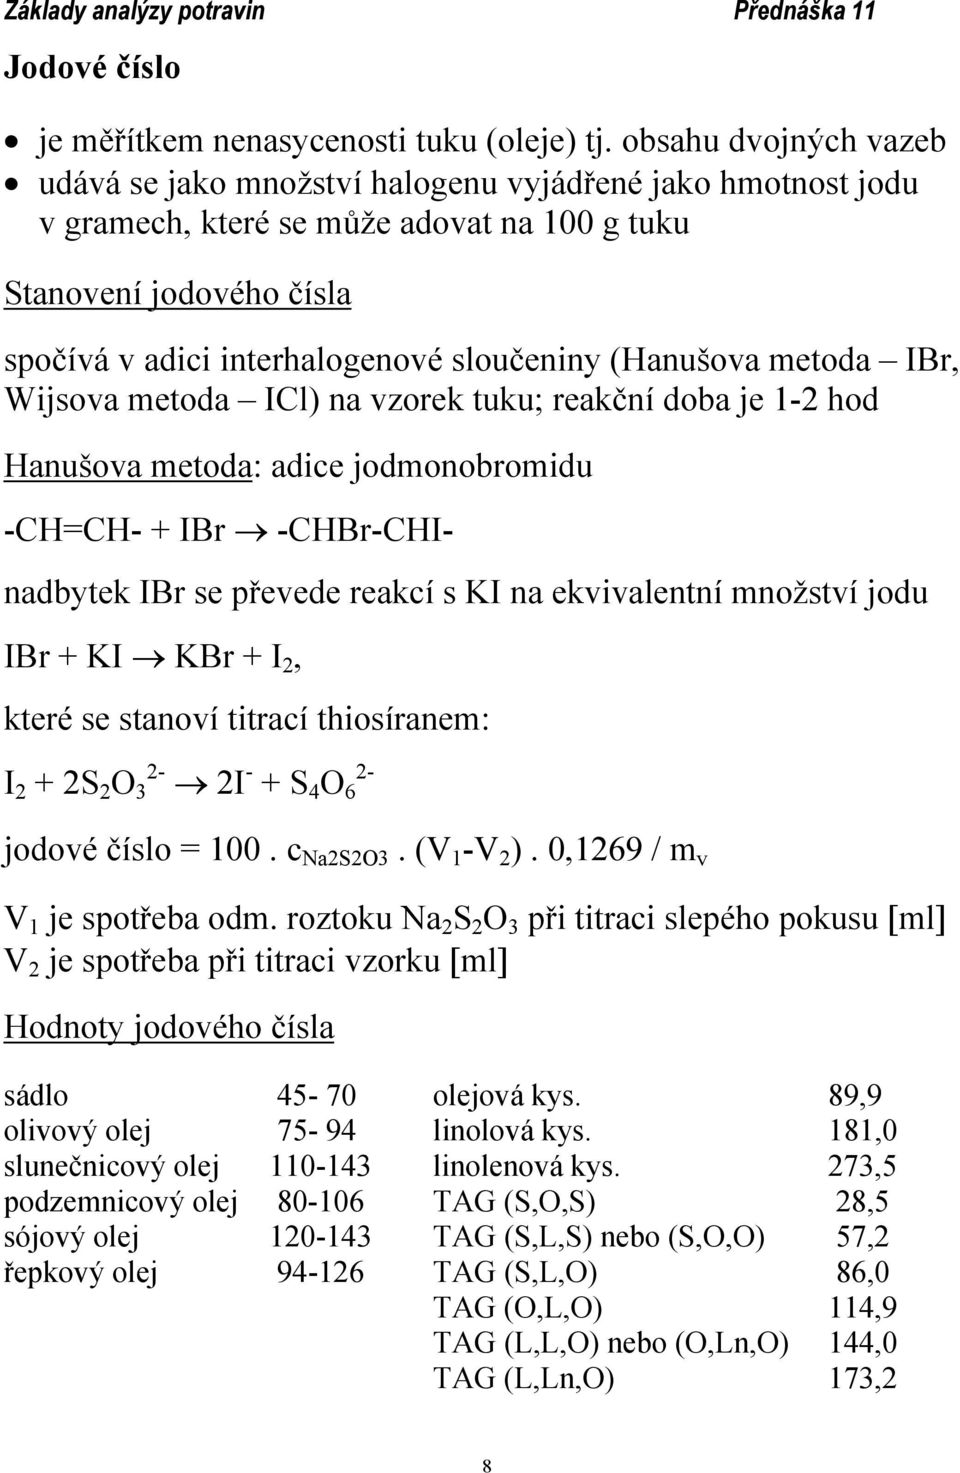 (Hanušova metoda IBr, Wijsova metoda ICl) na vzorek tuku; reakční doba je 1-2 hod Hanušova metoda: adice jodmonobromidu -CH=CH- + IBr -CHBr-CHI- nadbytek IBr se převede reakcí s KI na ekvivalentní